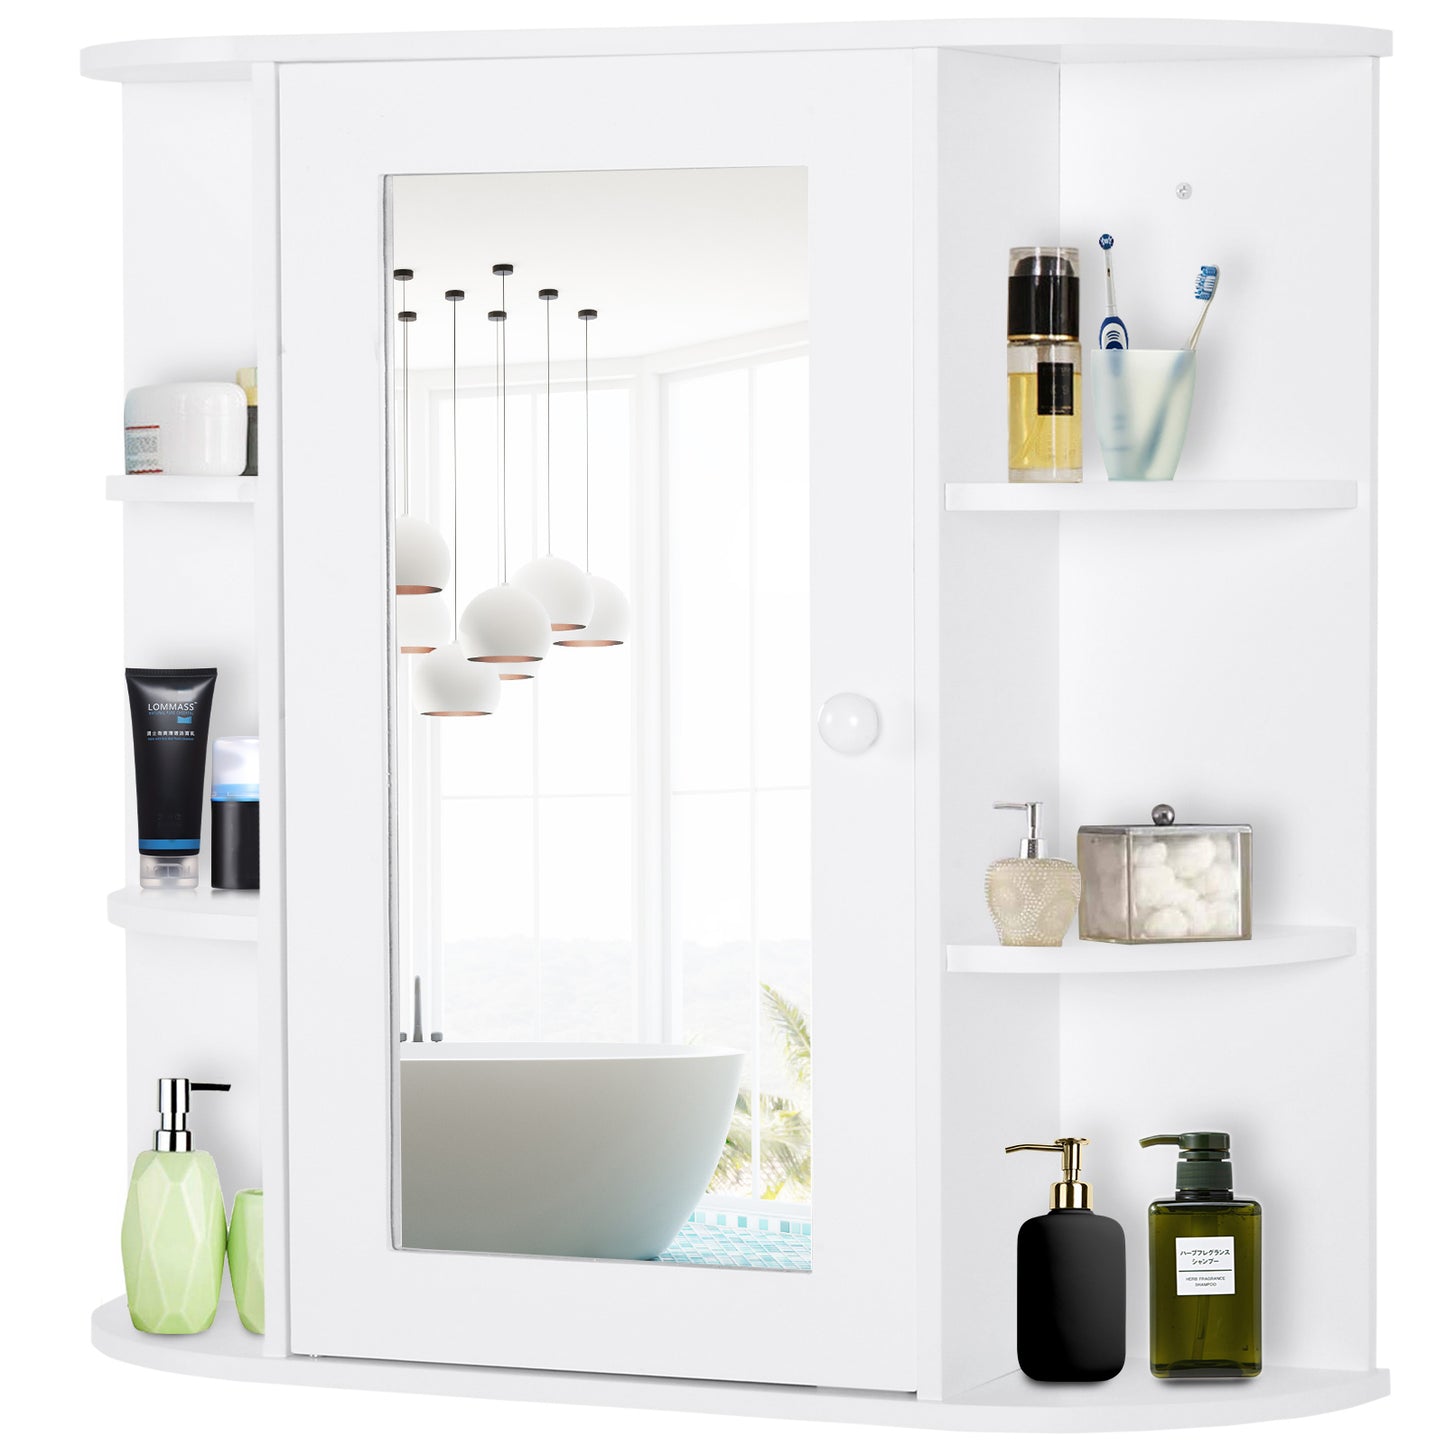 HOMCOM Wall Mount Mirror Cabinet Storage Bathroom Cupboard w/ Single Door and Shelves